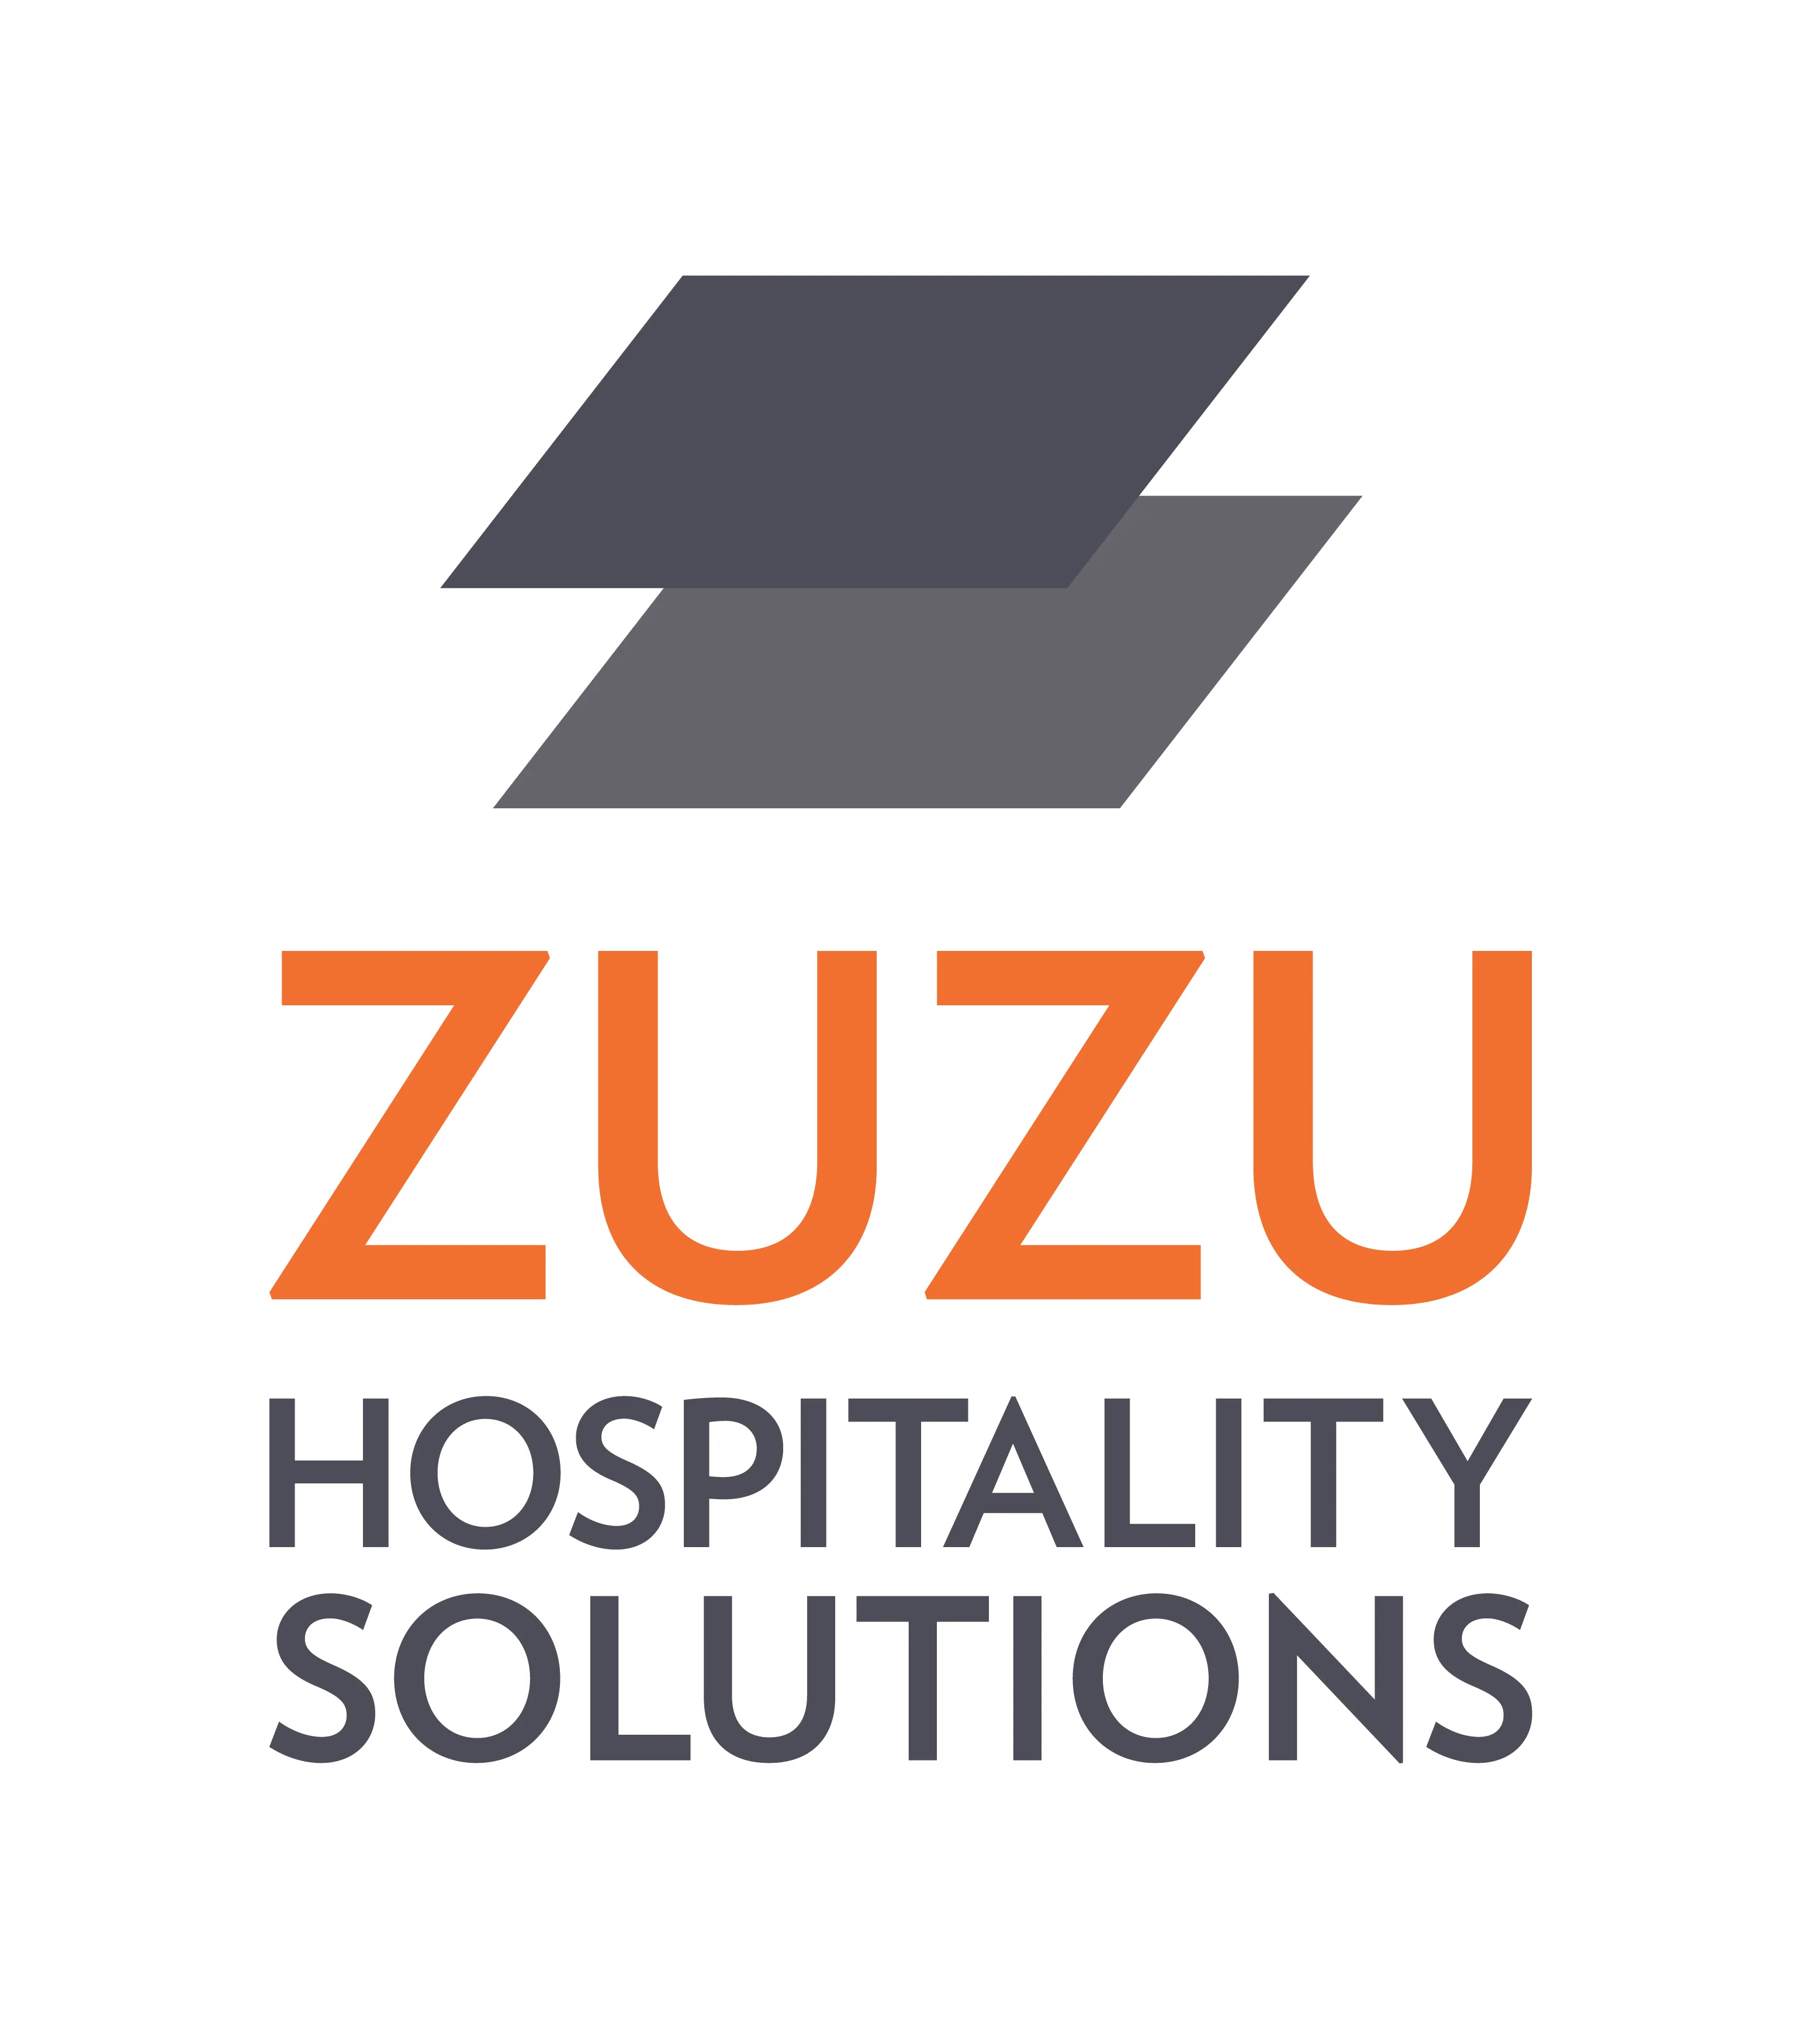 zuzu hospitality logo 2